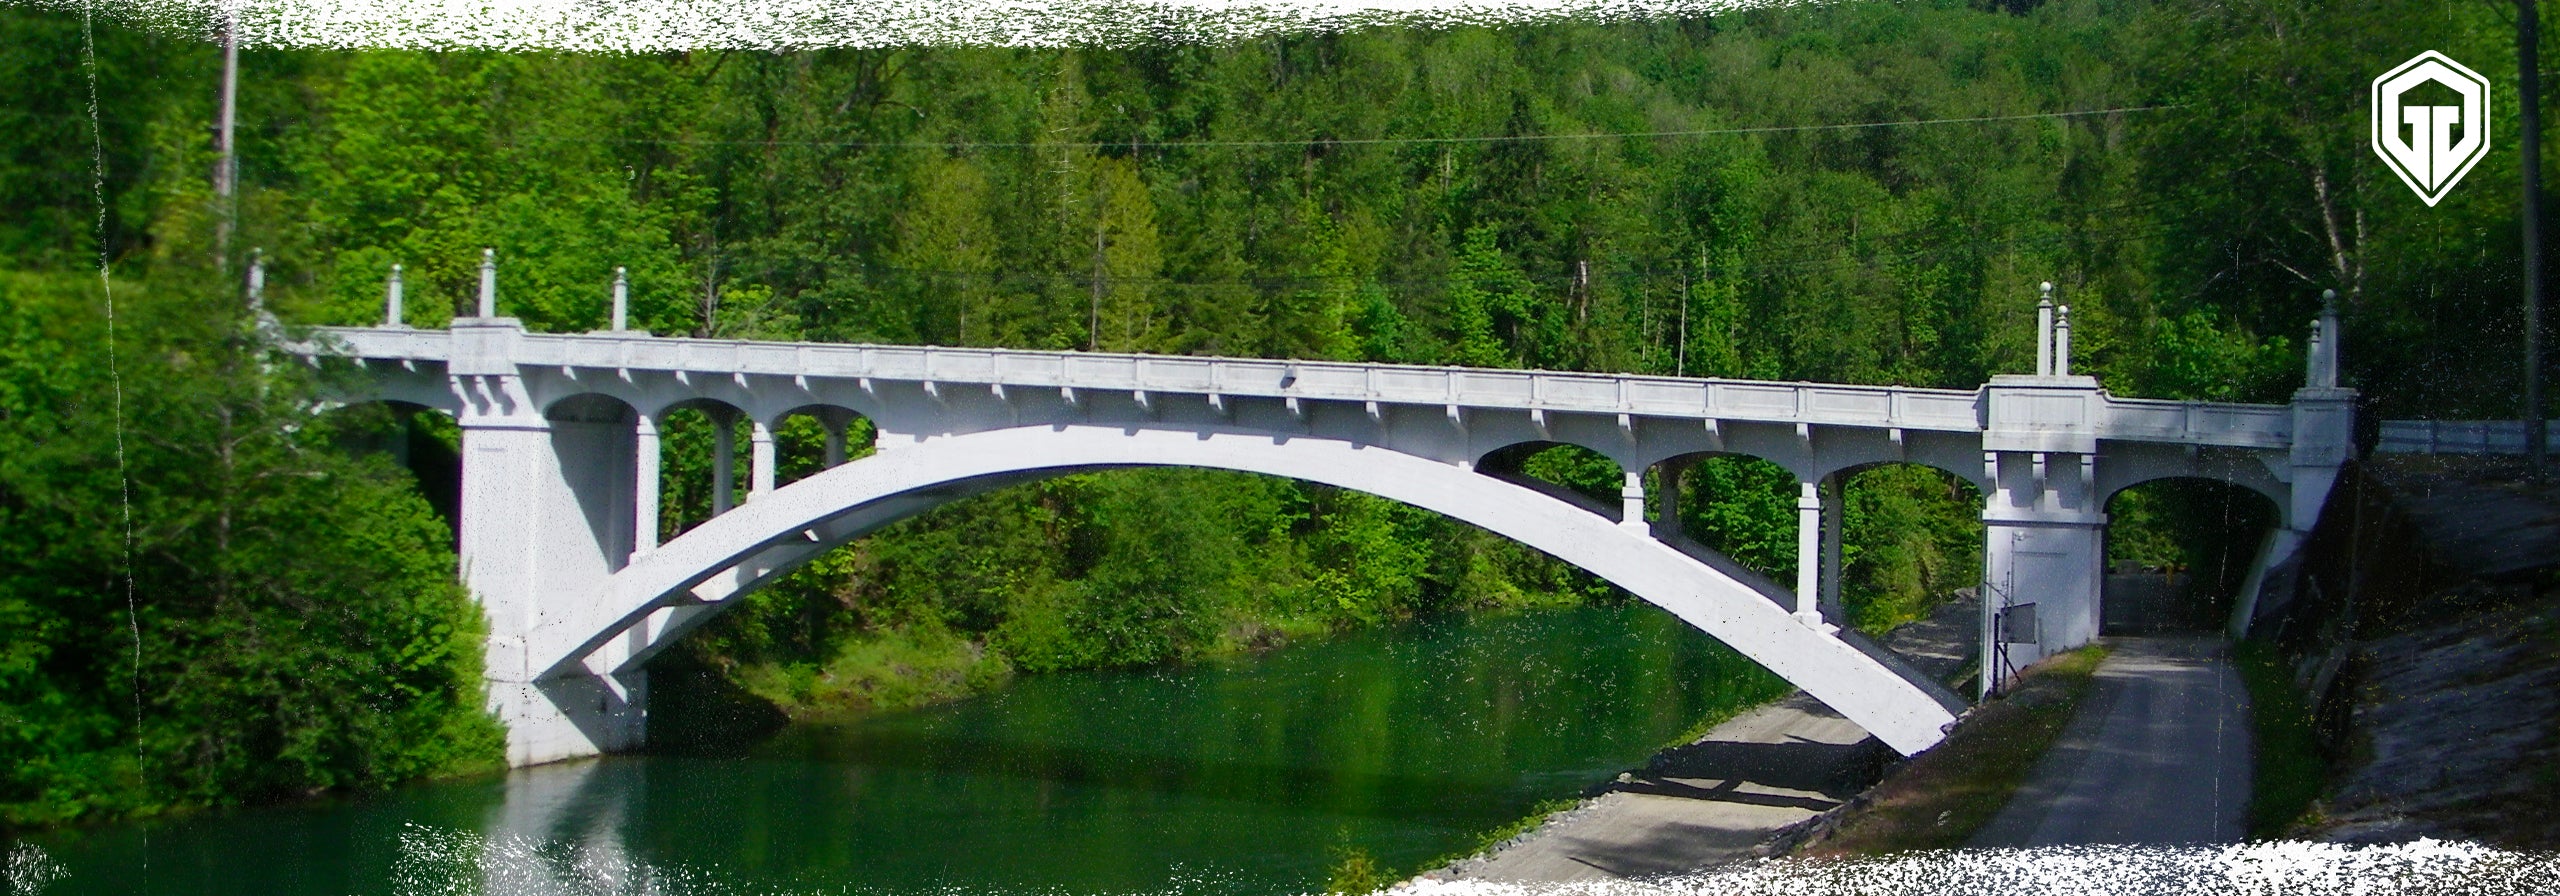 Bridge in Concrete - Scenery Image